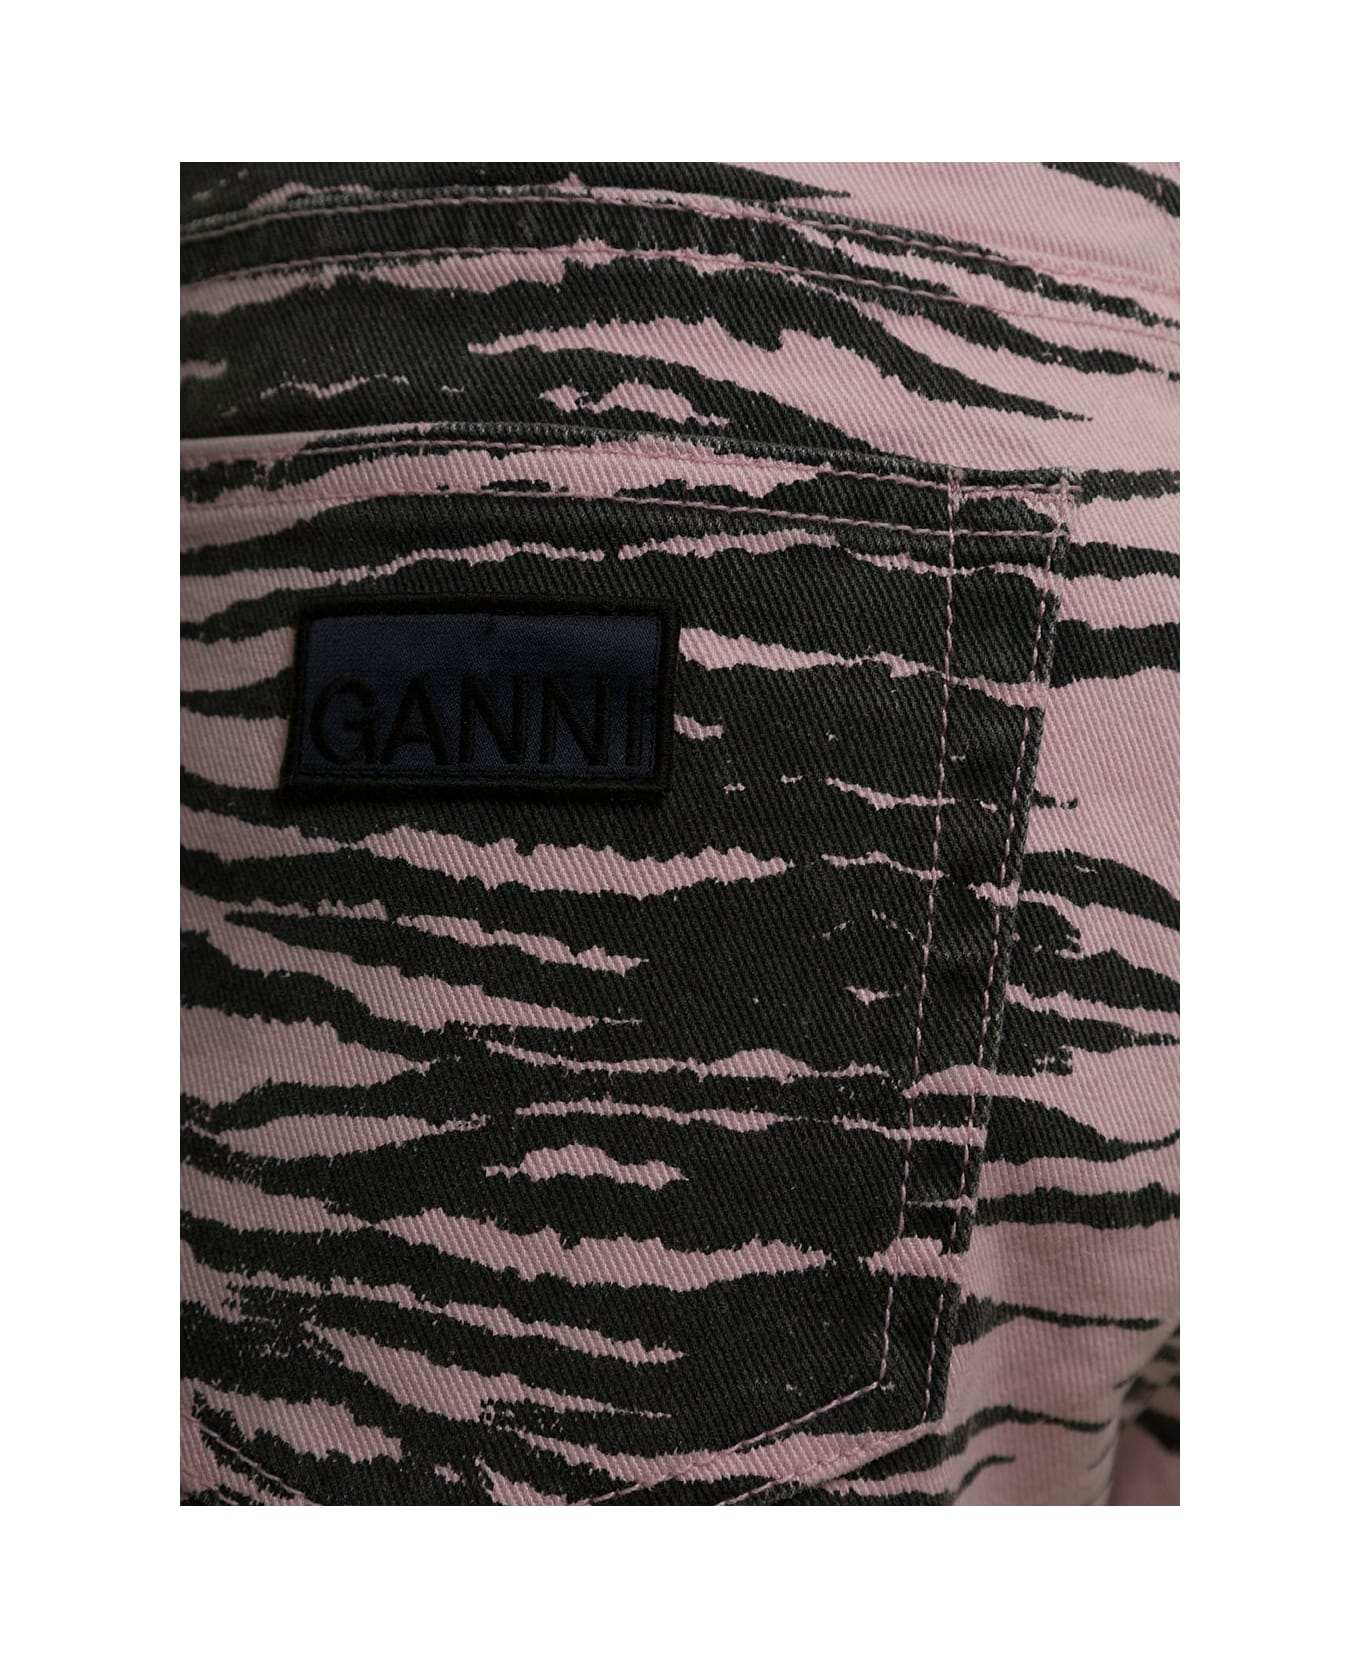 Ganni Woman's Organic Denim Zebra Printed Shorts - Violet ショートパンツ